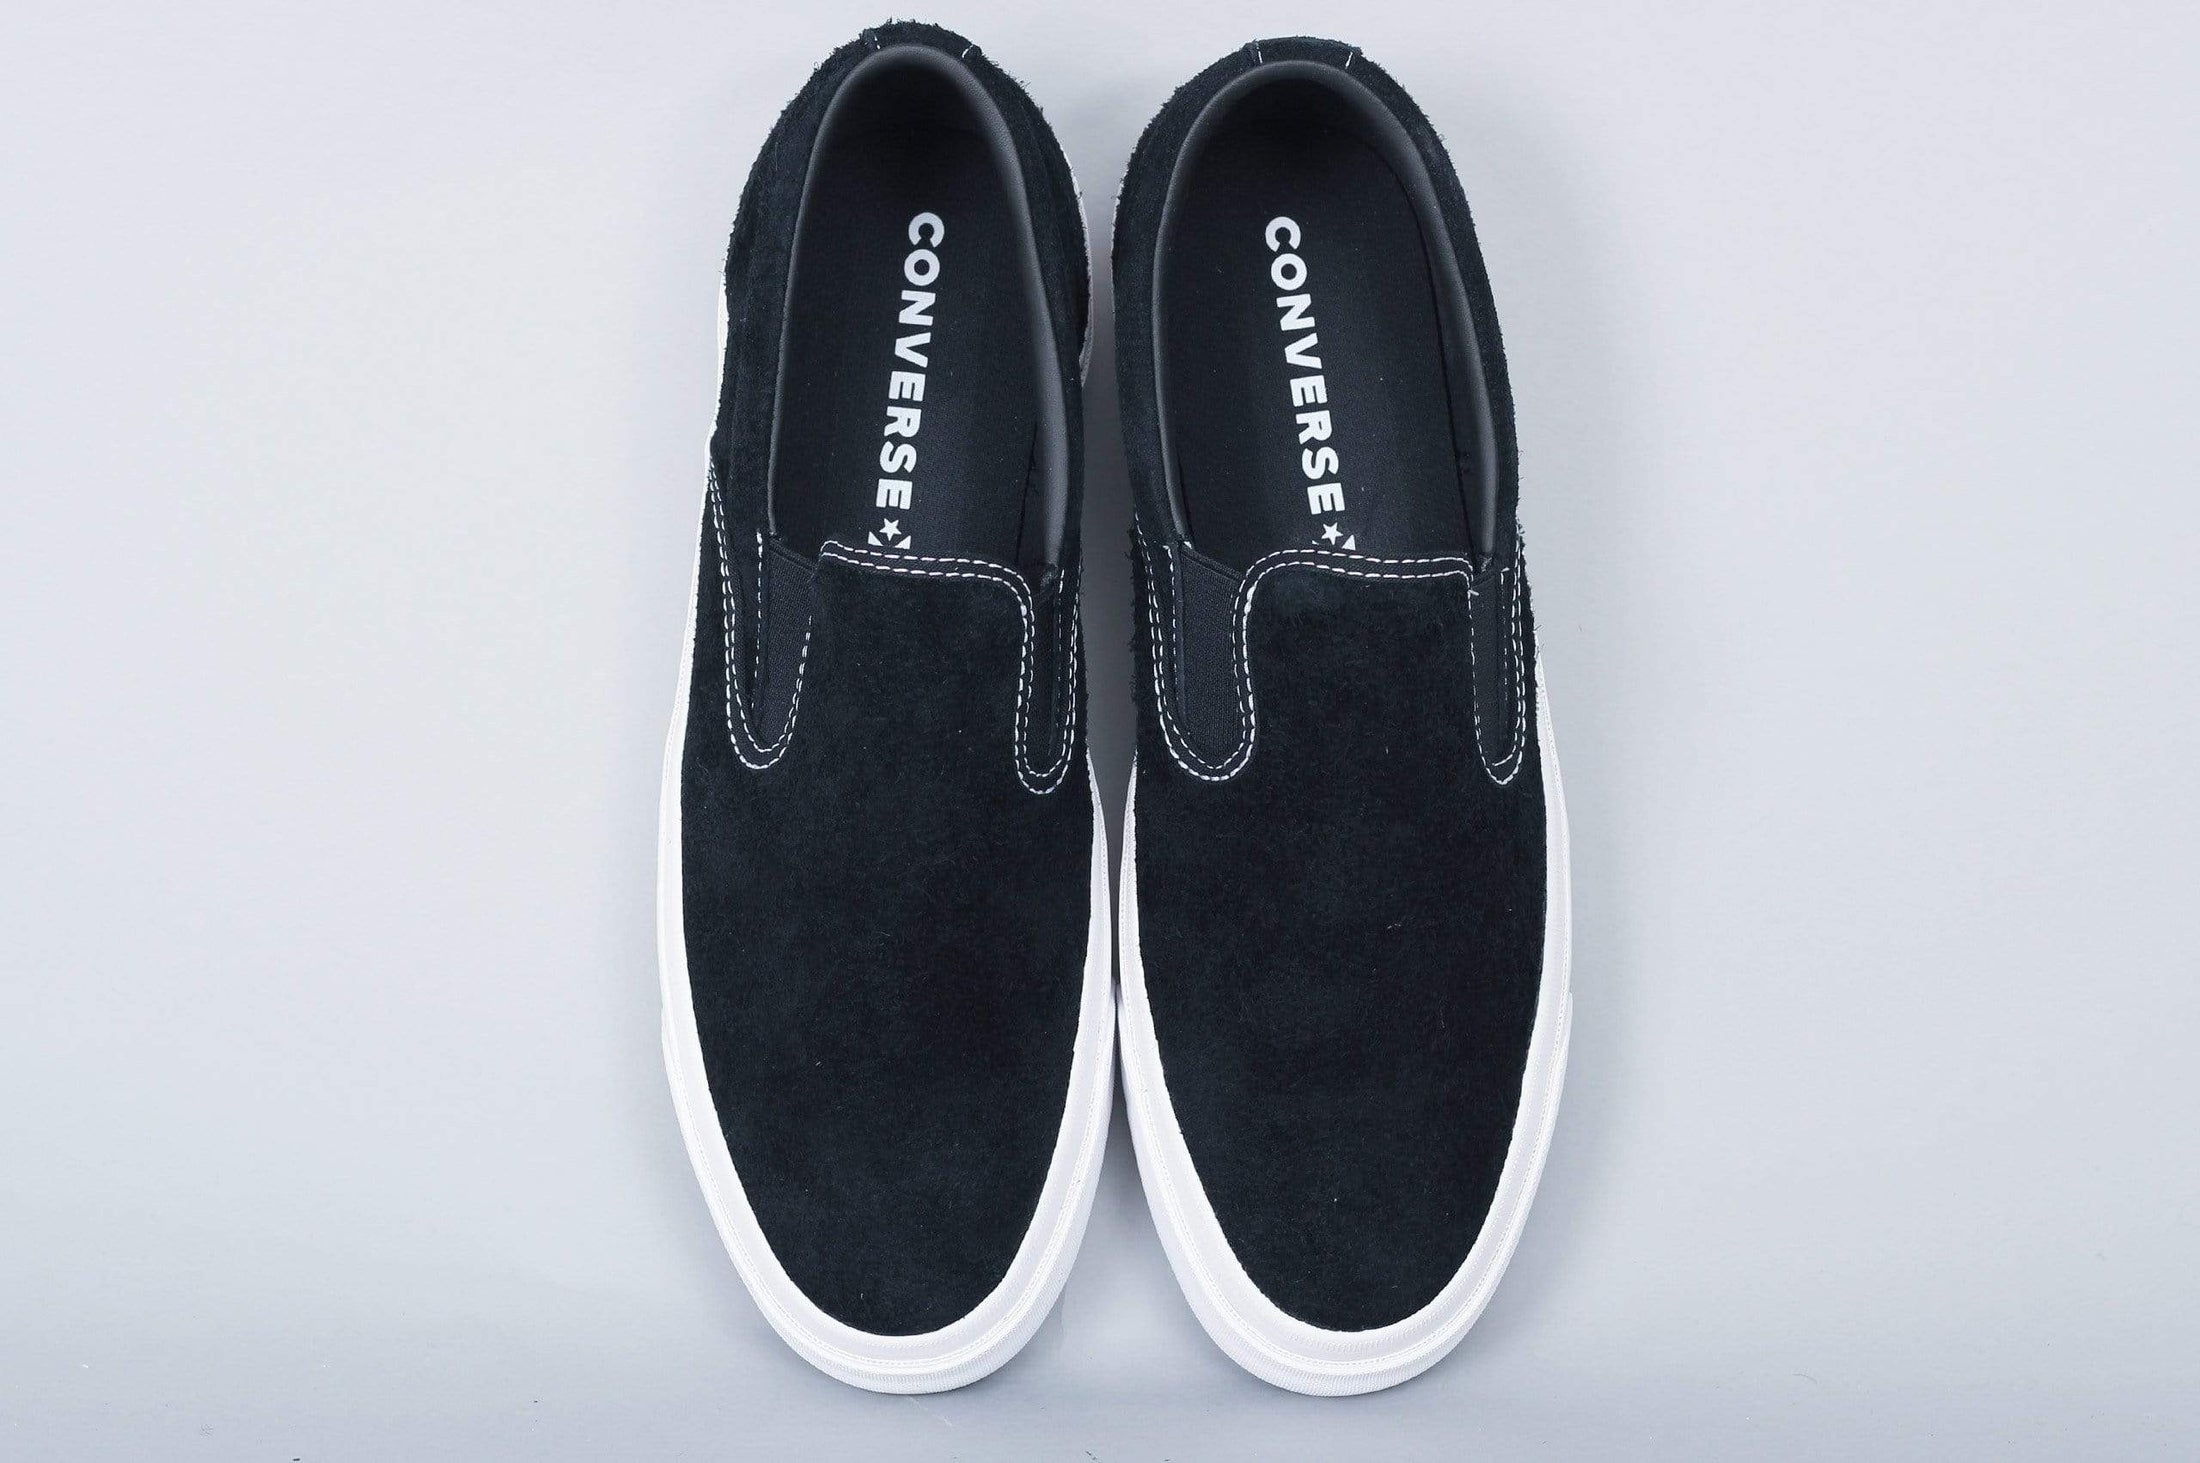 Converse One Star CC Slip Shoes Black / Black / White